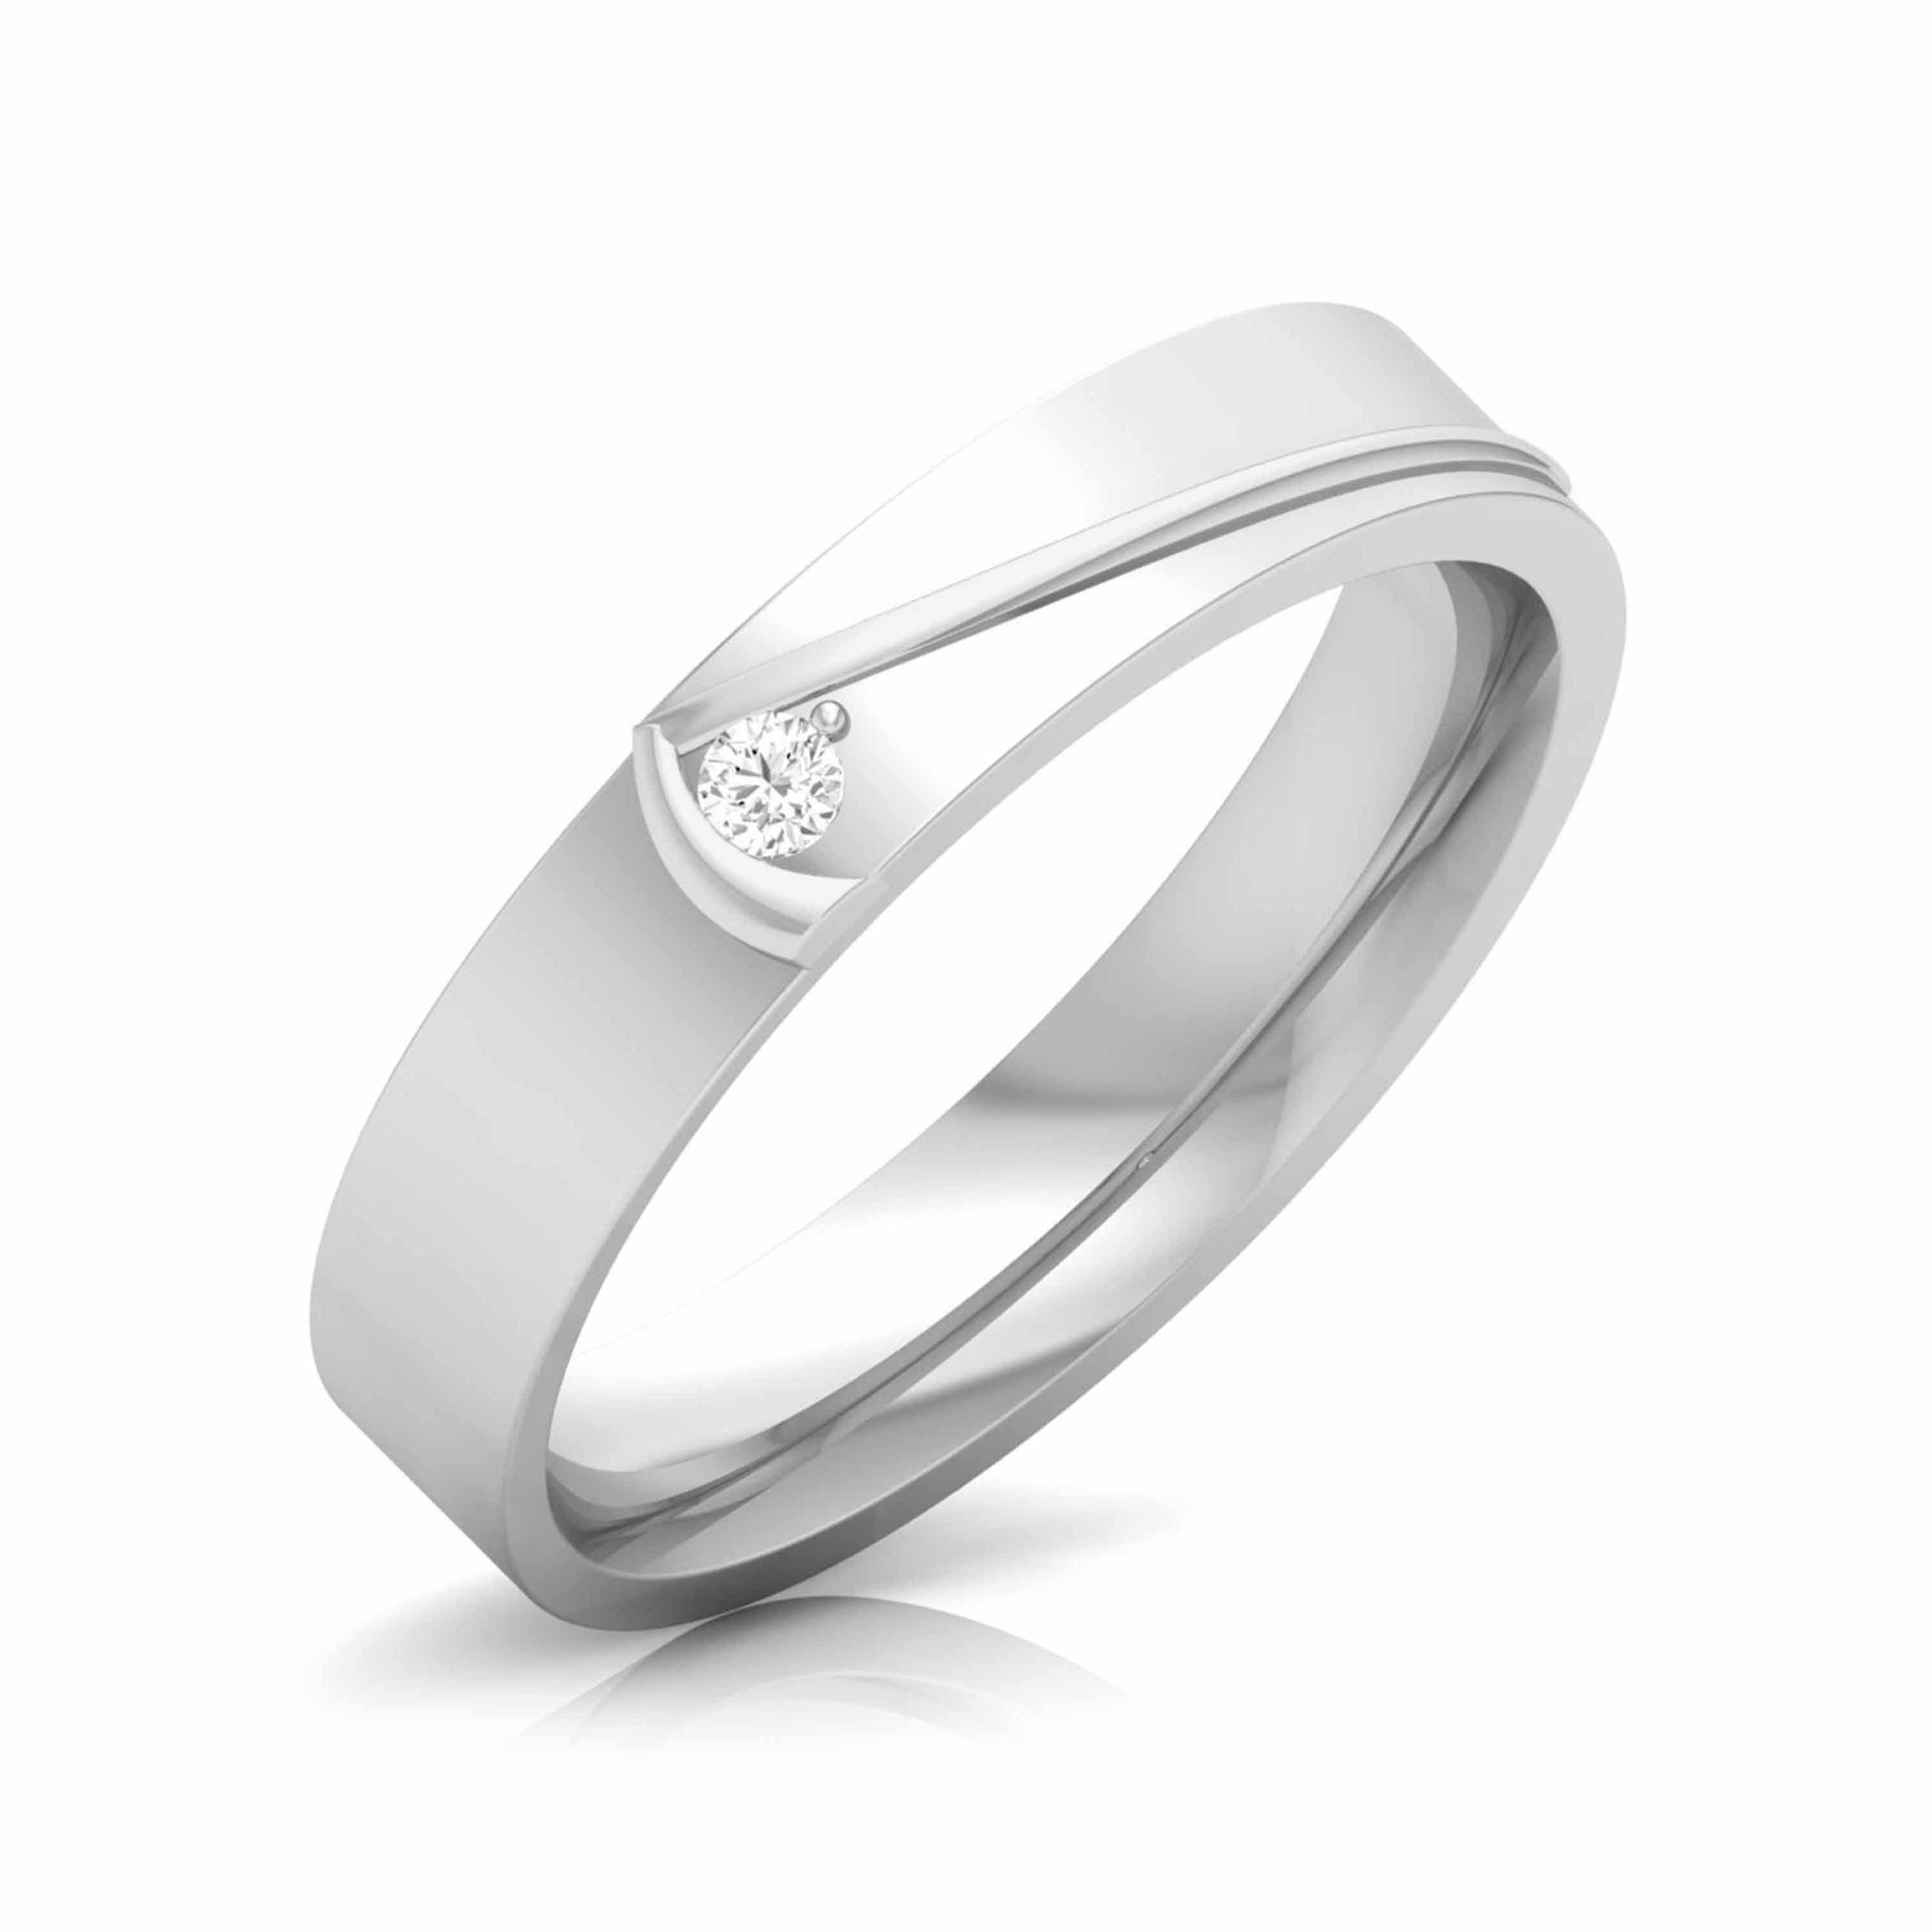 CaratLane .925 Sterling Silver and Diamond Ring : Amazon.in: Fashion